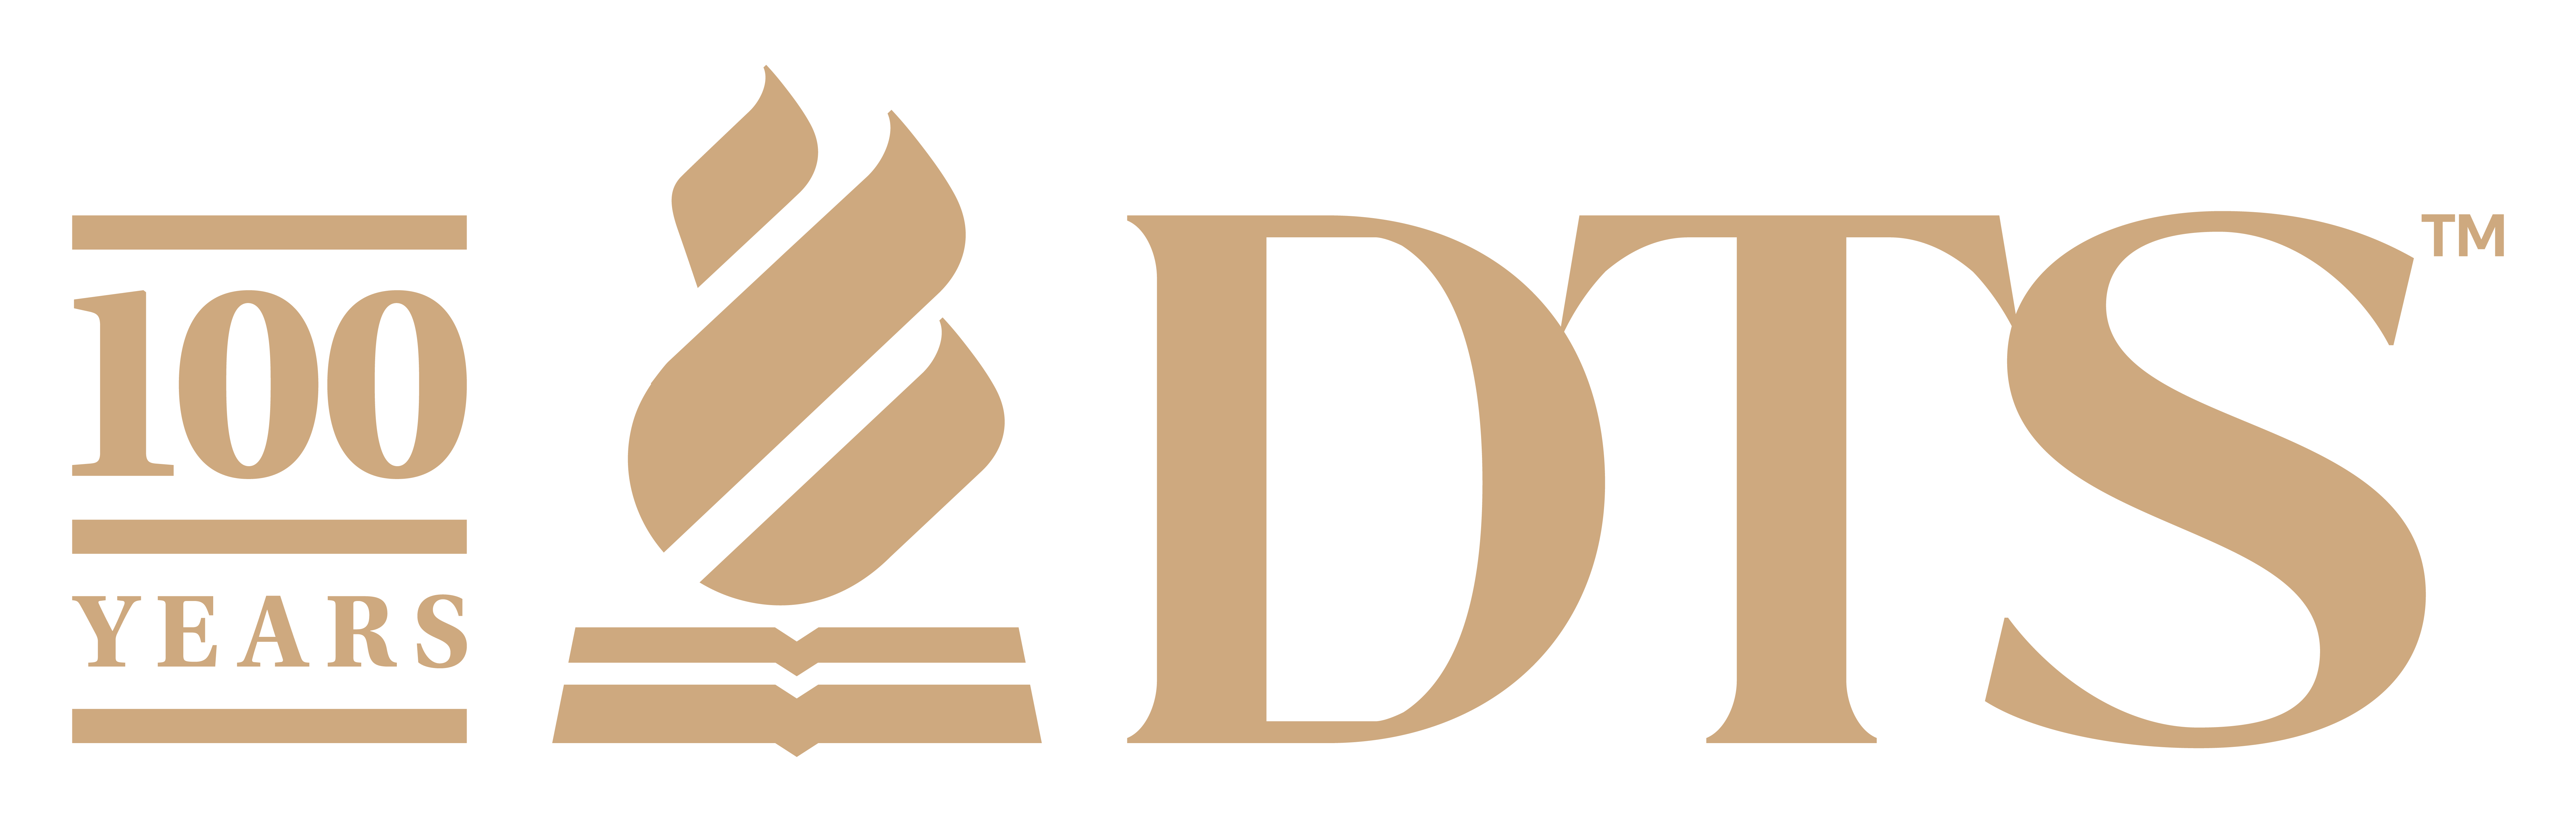 Dallas Theological Seminary logo